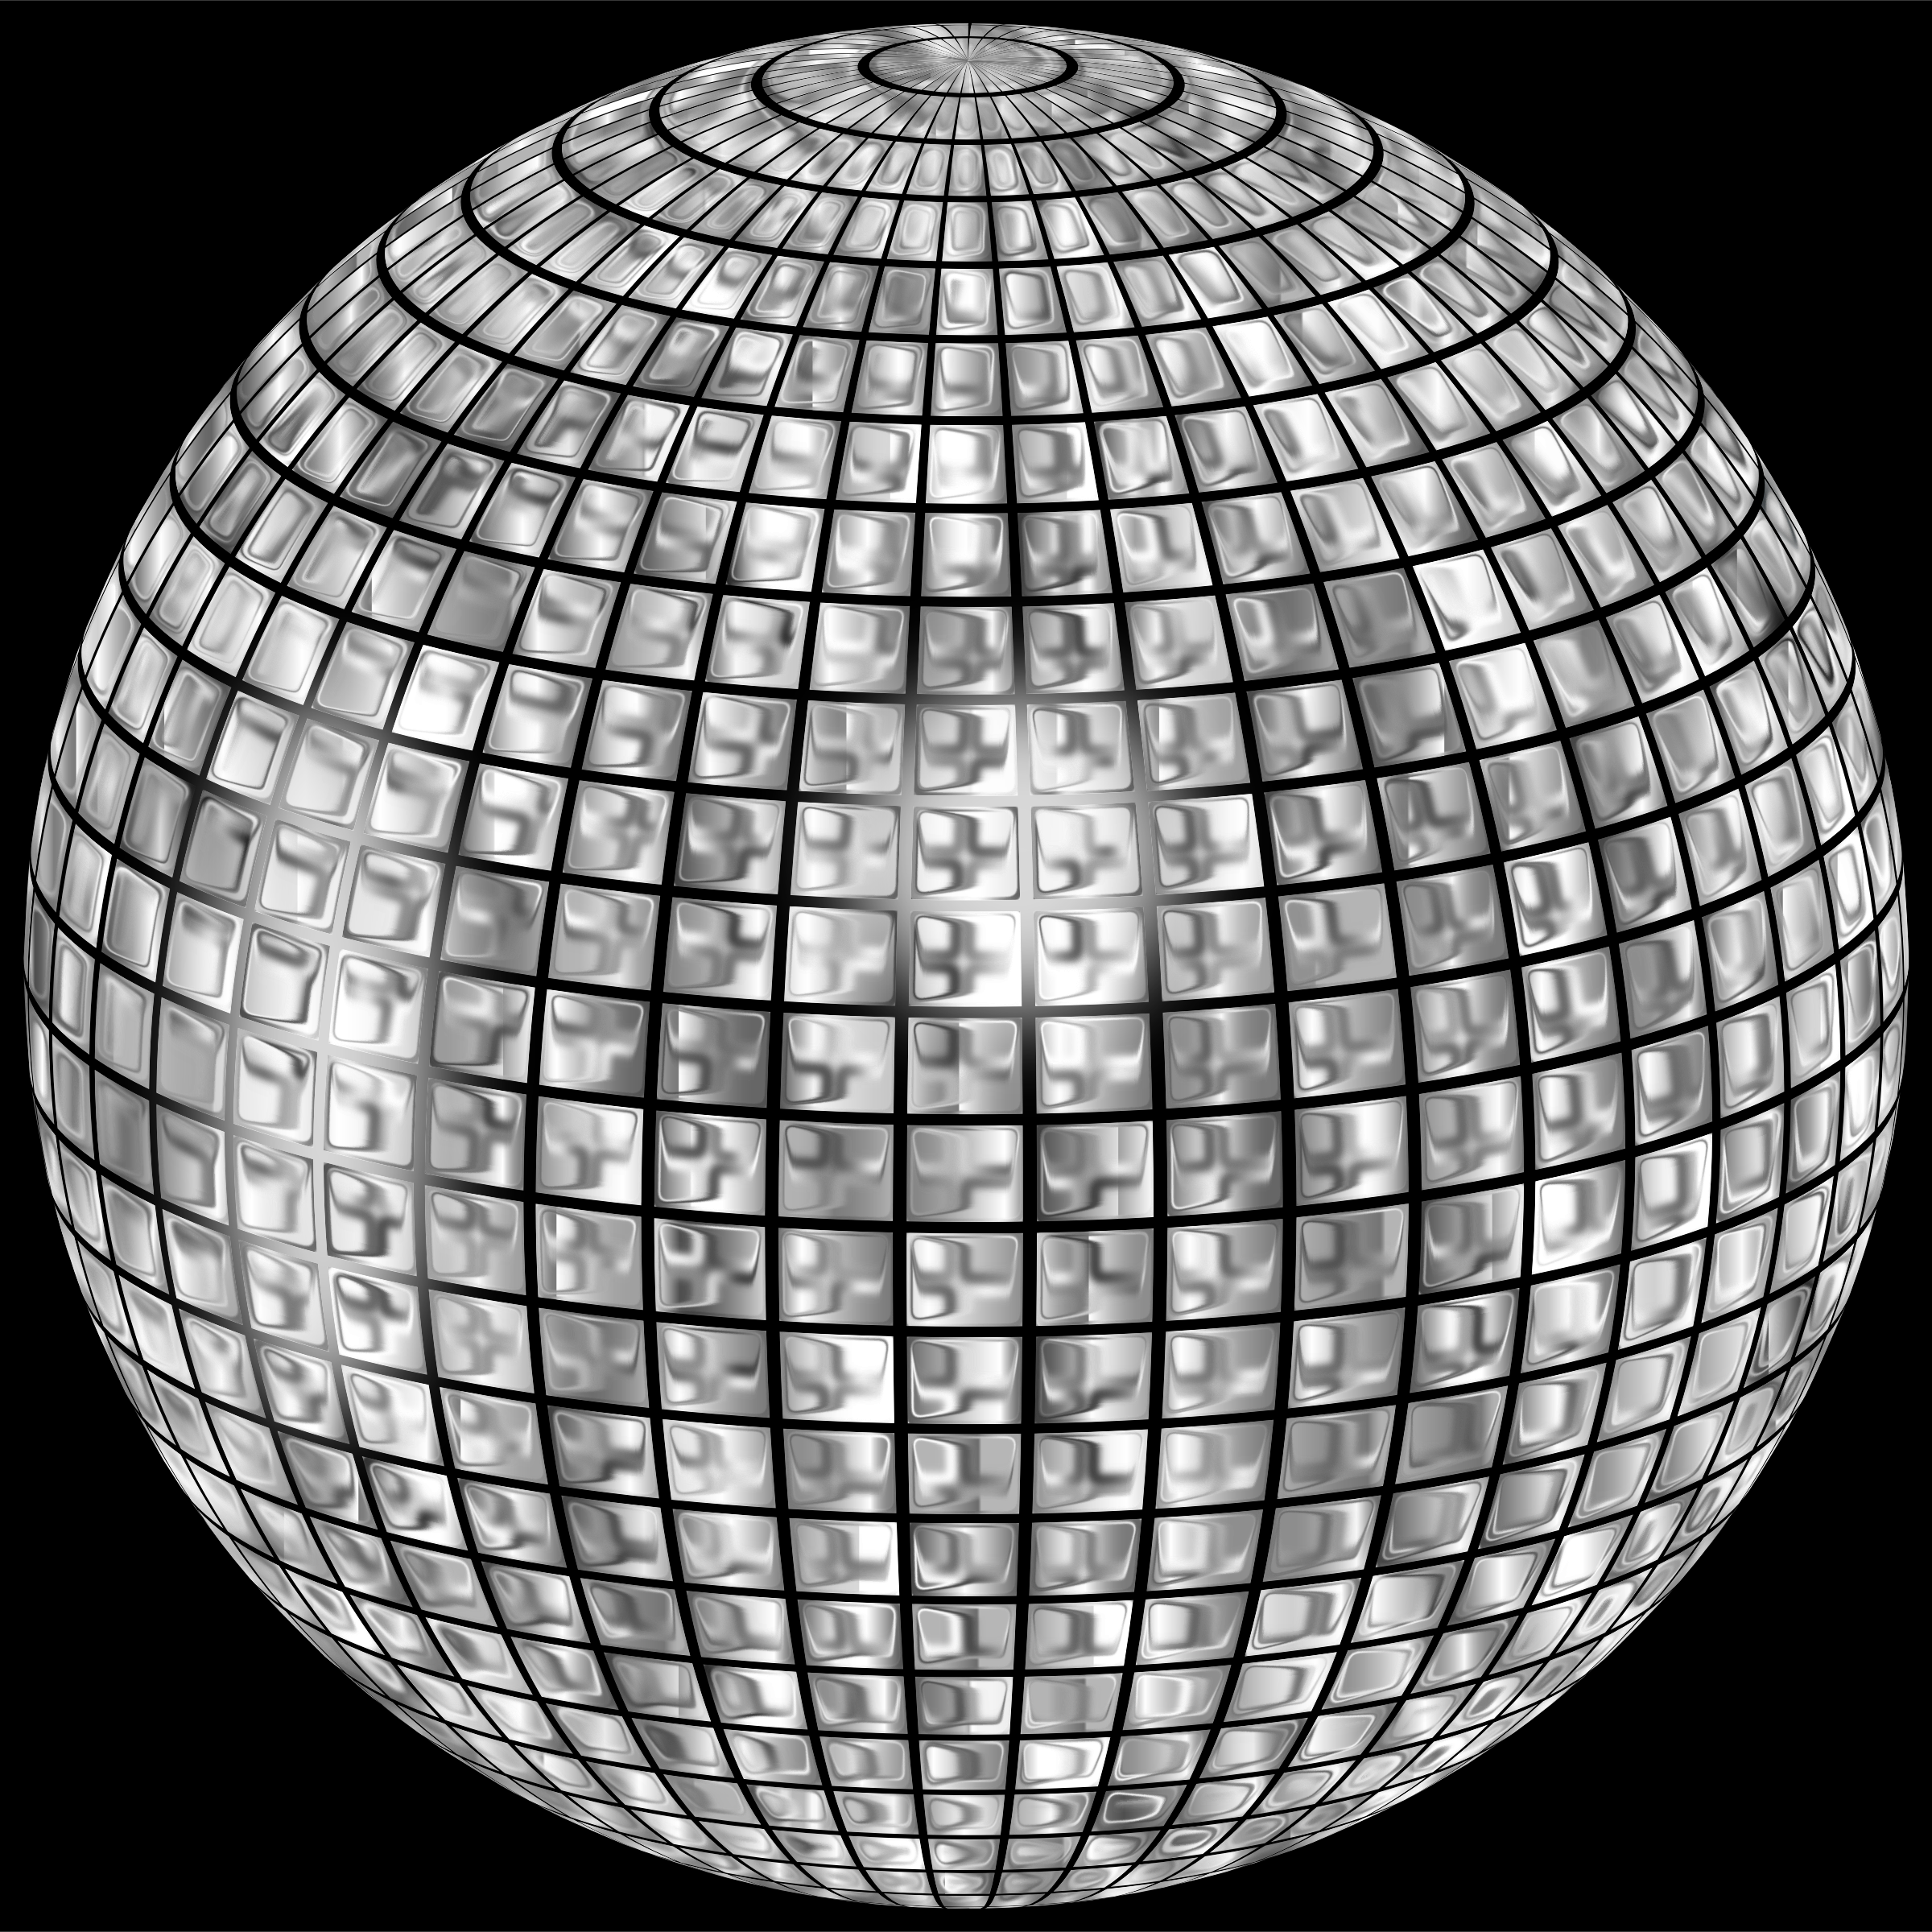 Disco Ball Vector Art Image Free Stock Photo Public Domain Photo Cc0 Images